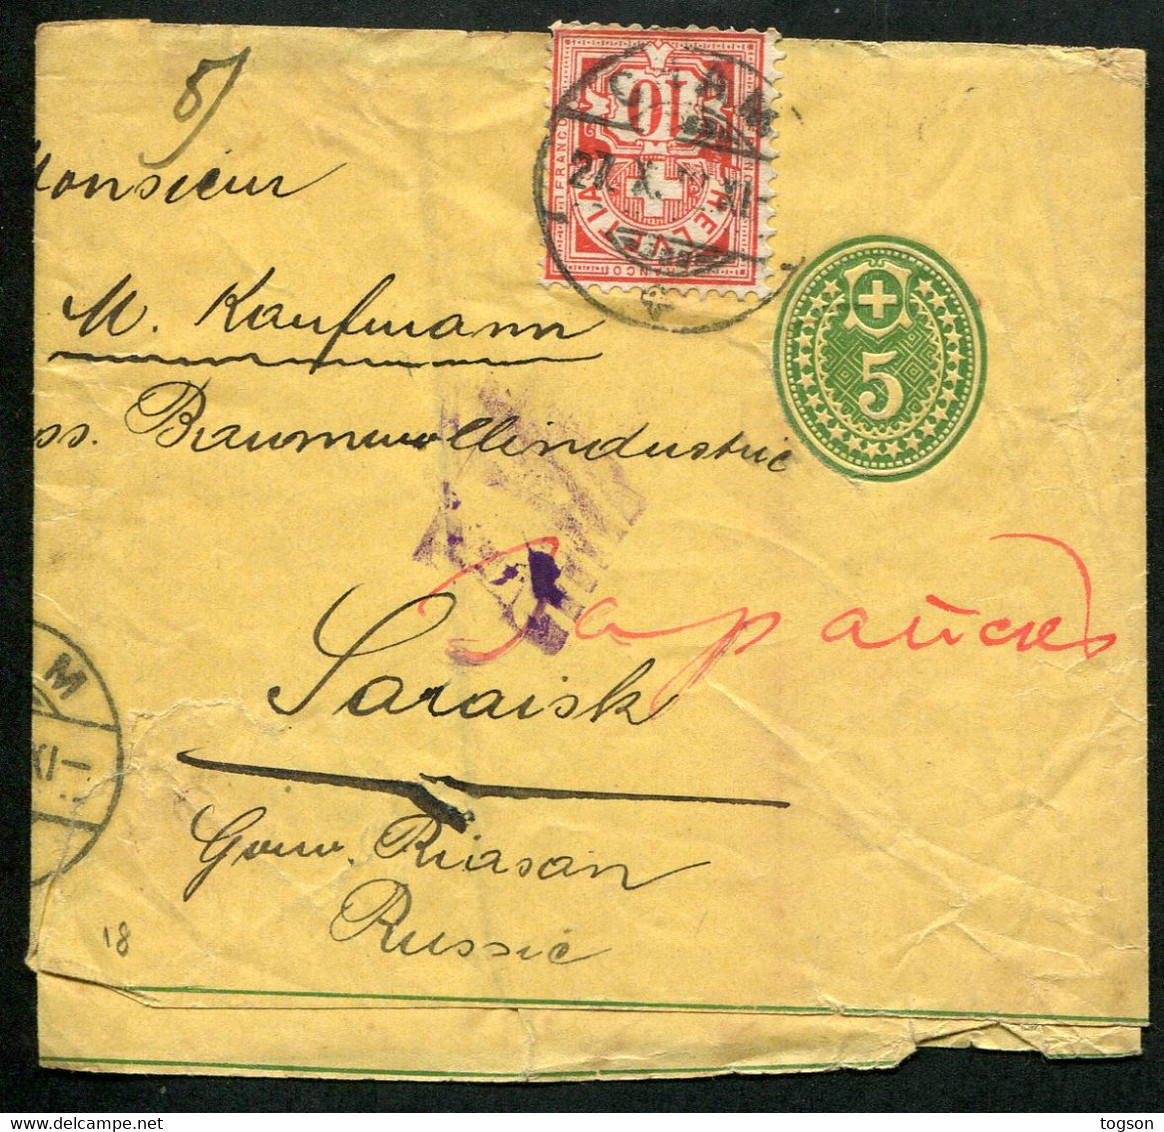 Russia CIVIL CENSORSHIP Wrapper From Switzerland To Zaraisk Ryazan Gubernia "Д.Ц. Москва" Printed Matter RARE - Covers & Documents